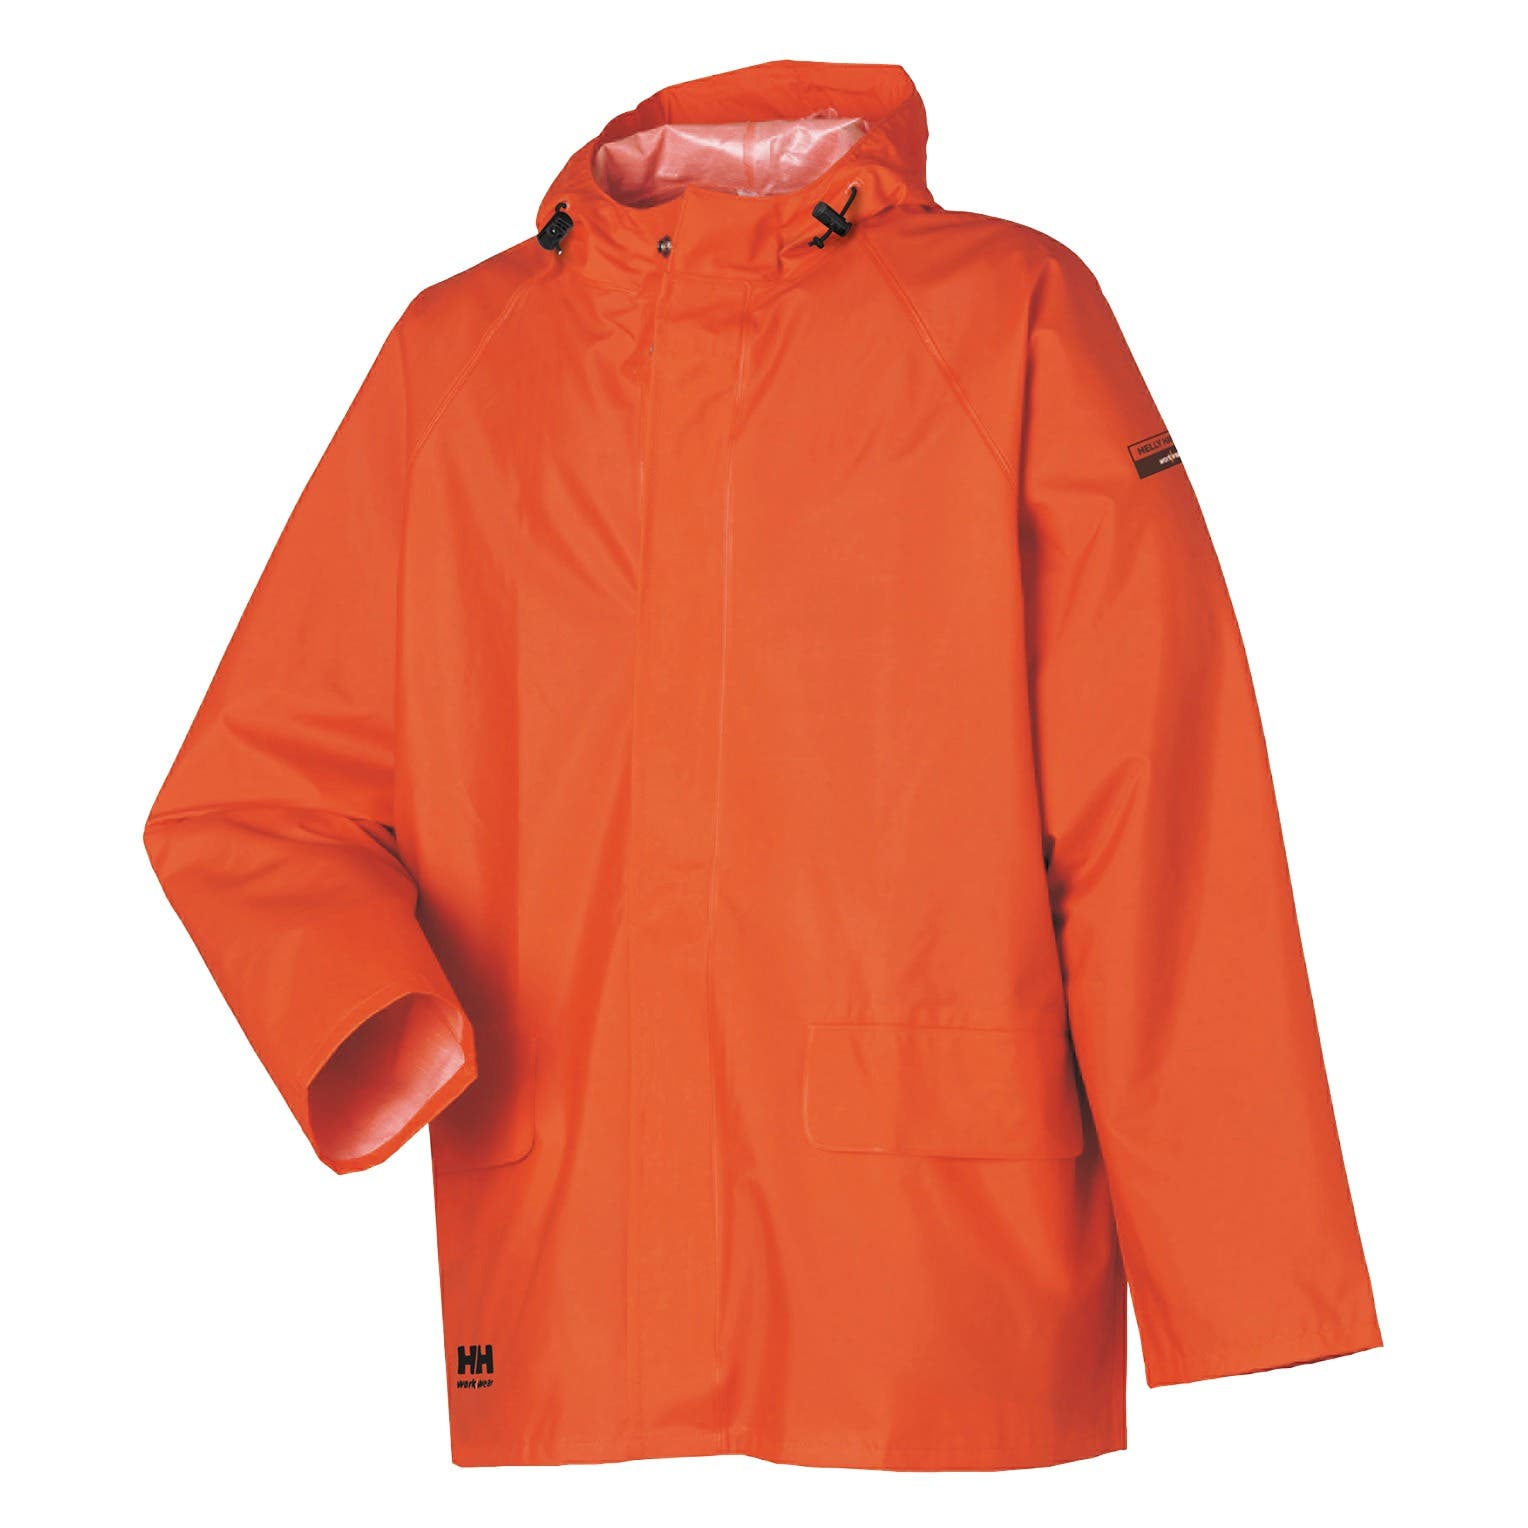 Helly Hansen Men's Mandal Rain Jacket in Dark Orange from the front